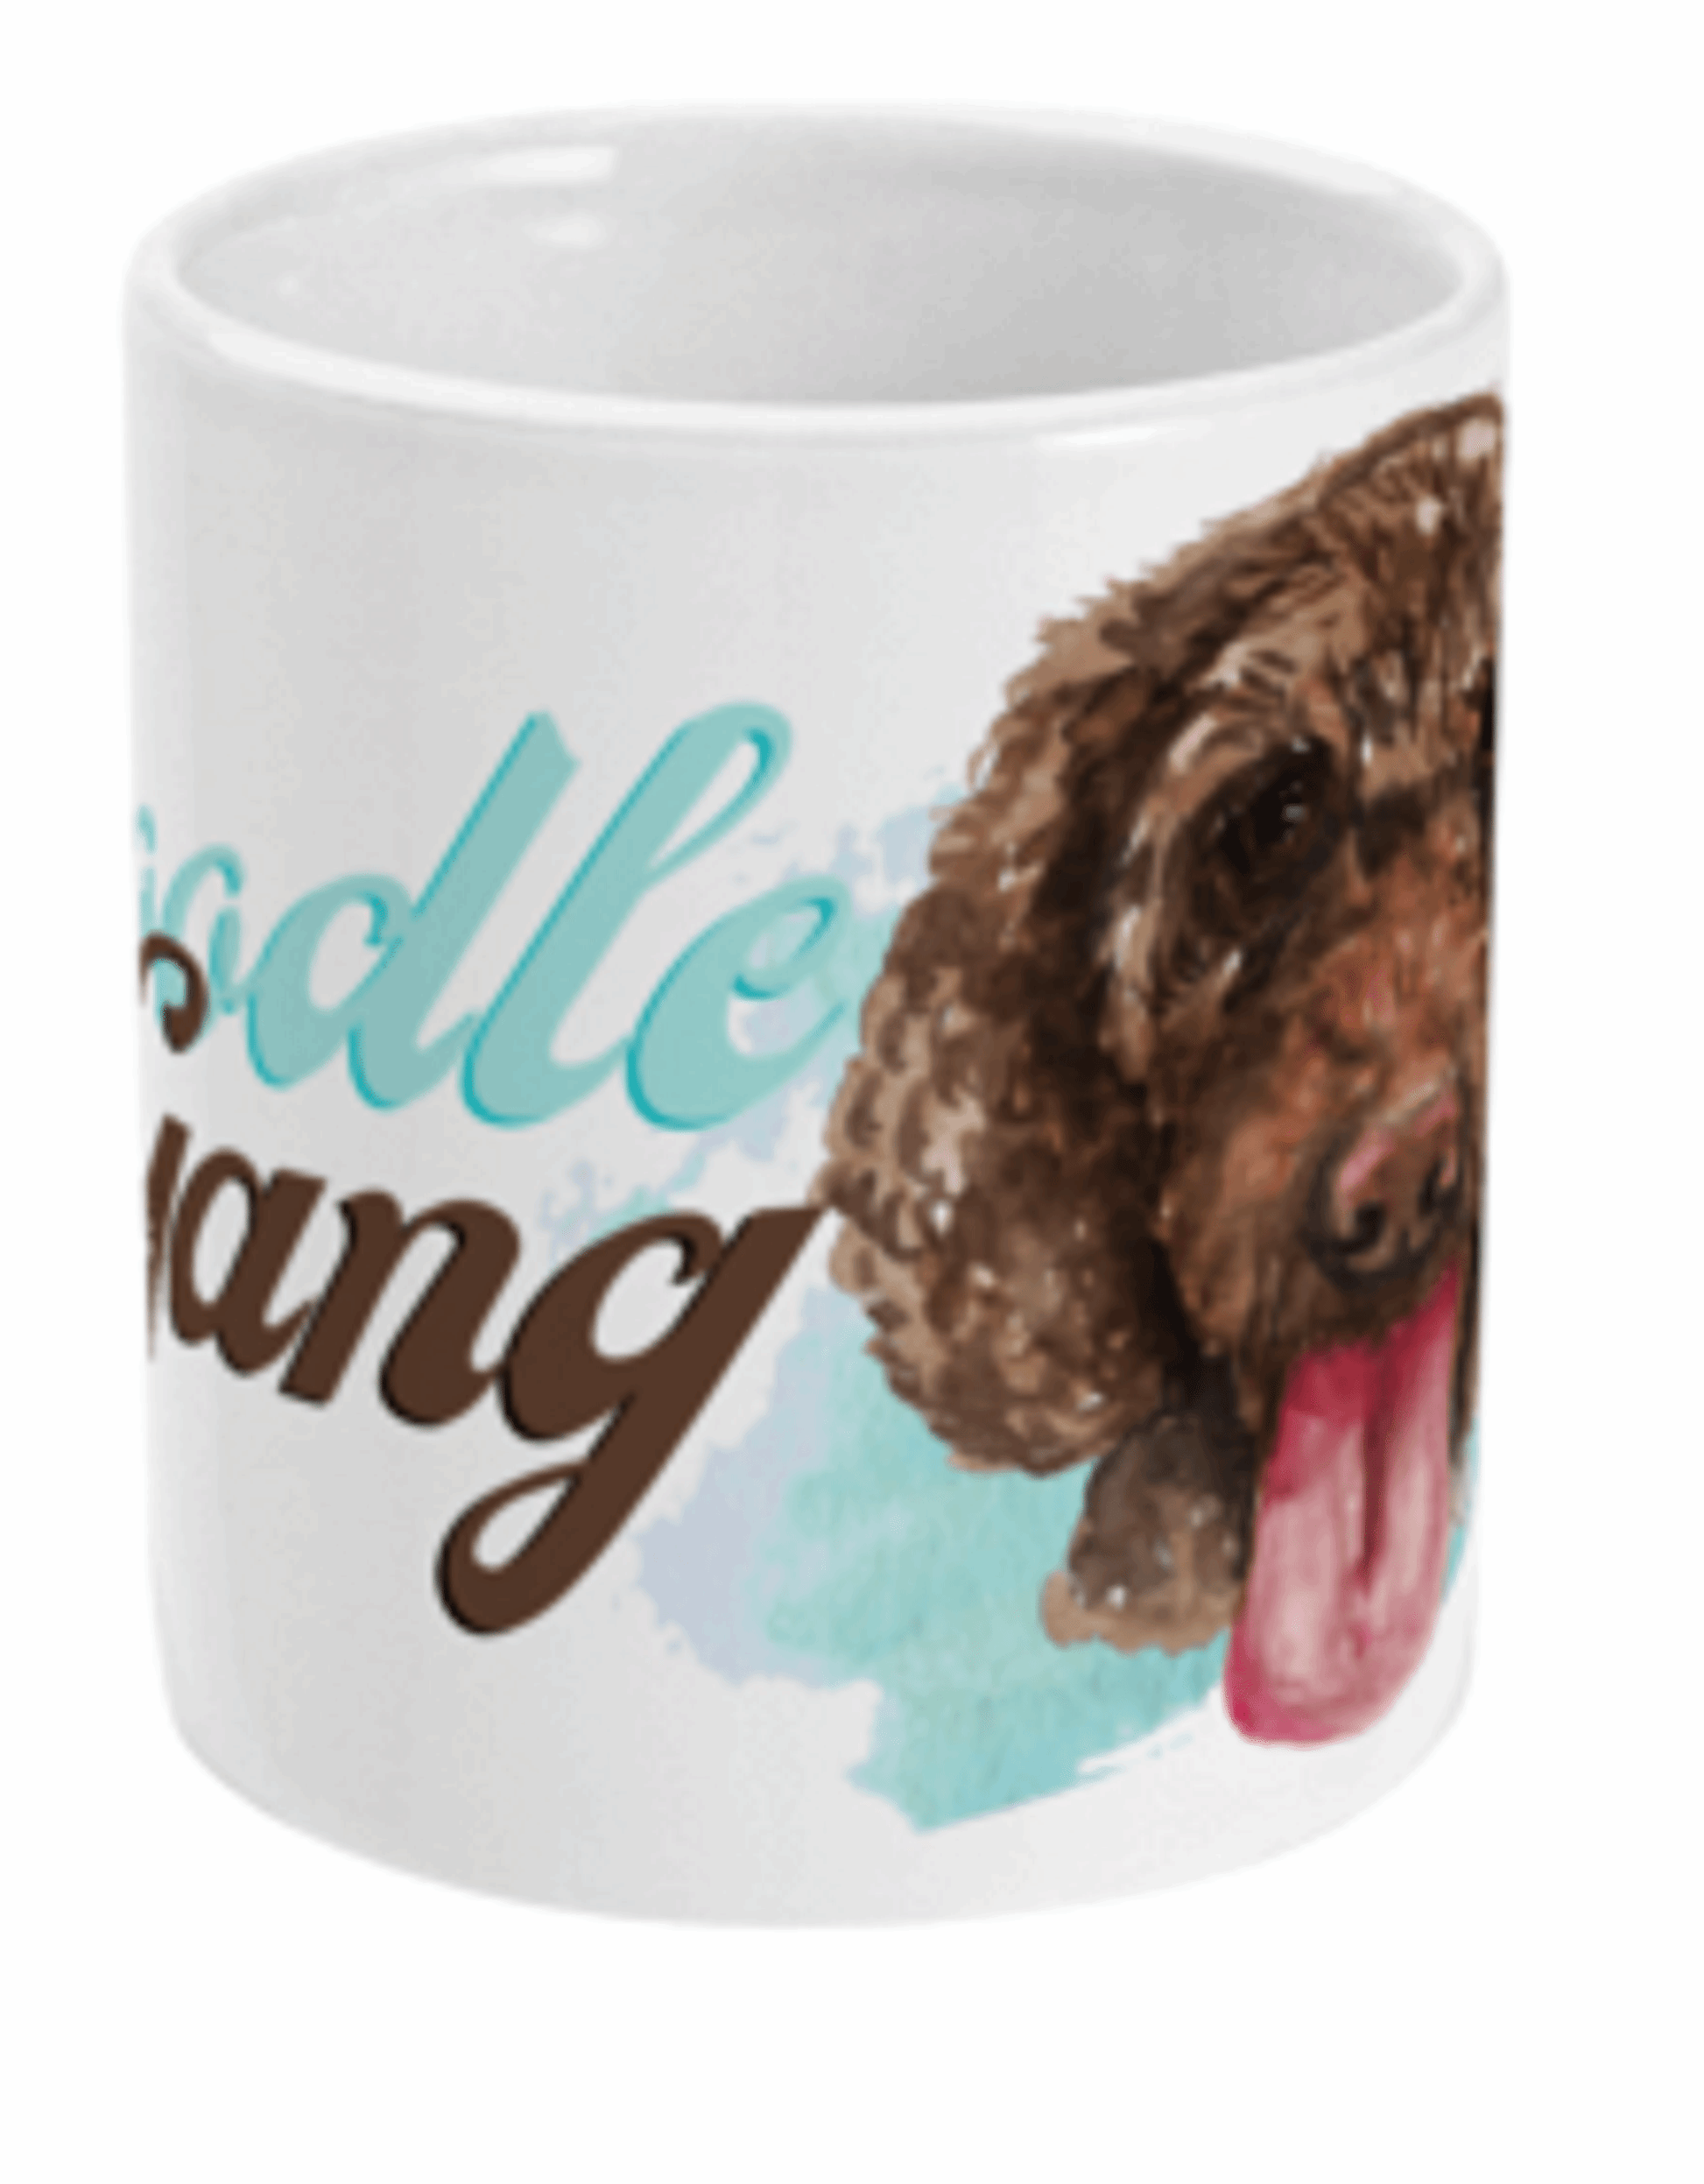  Doodle Gang Dog Coffee/Tea Mug by Free Spirit Accessories sold by Free Spirit Accessories